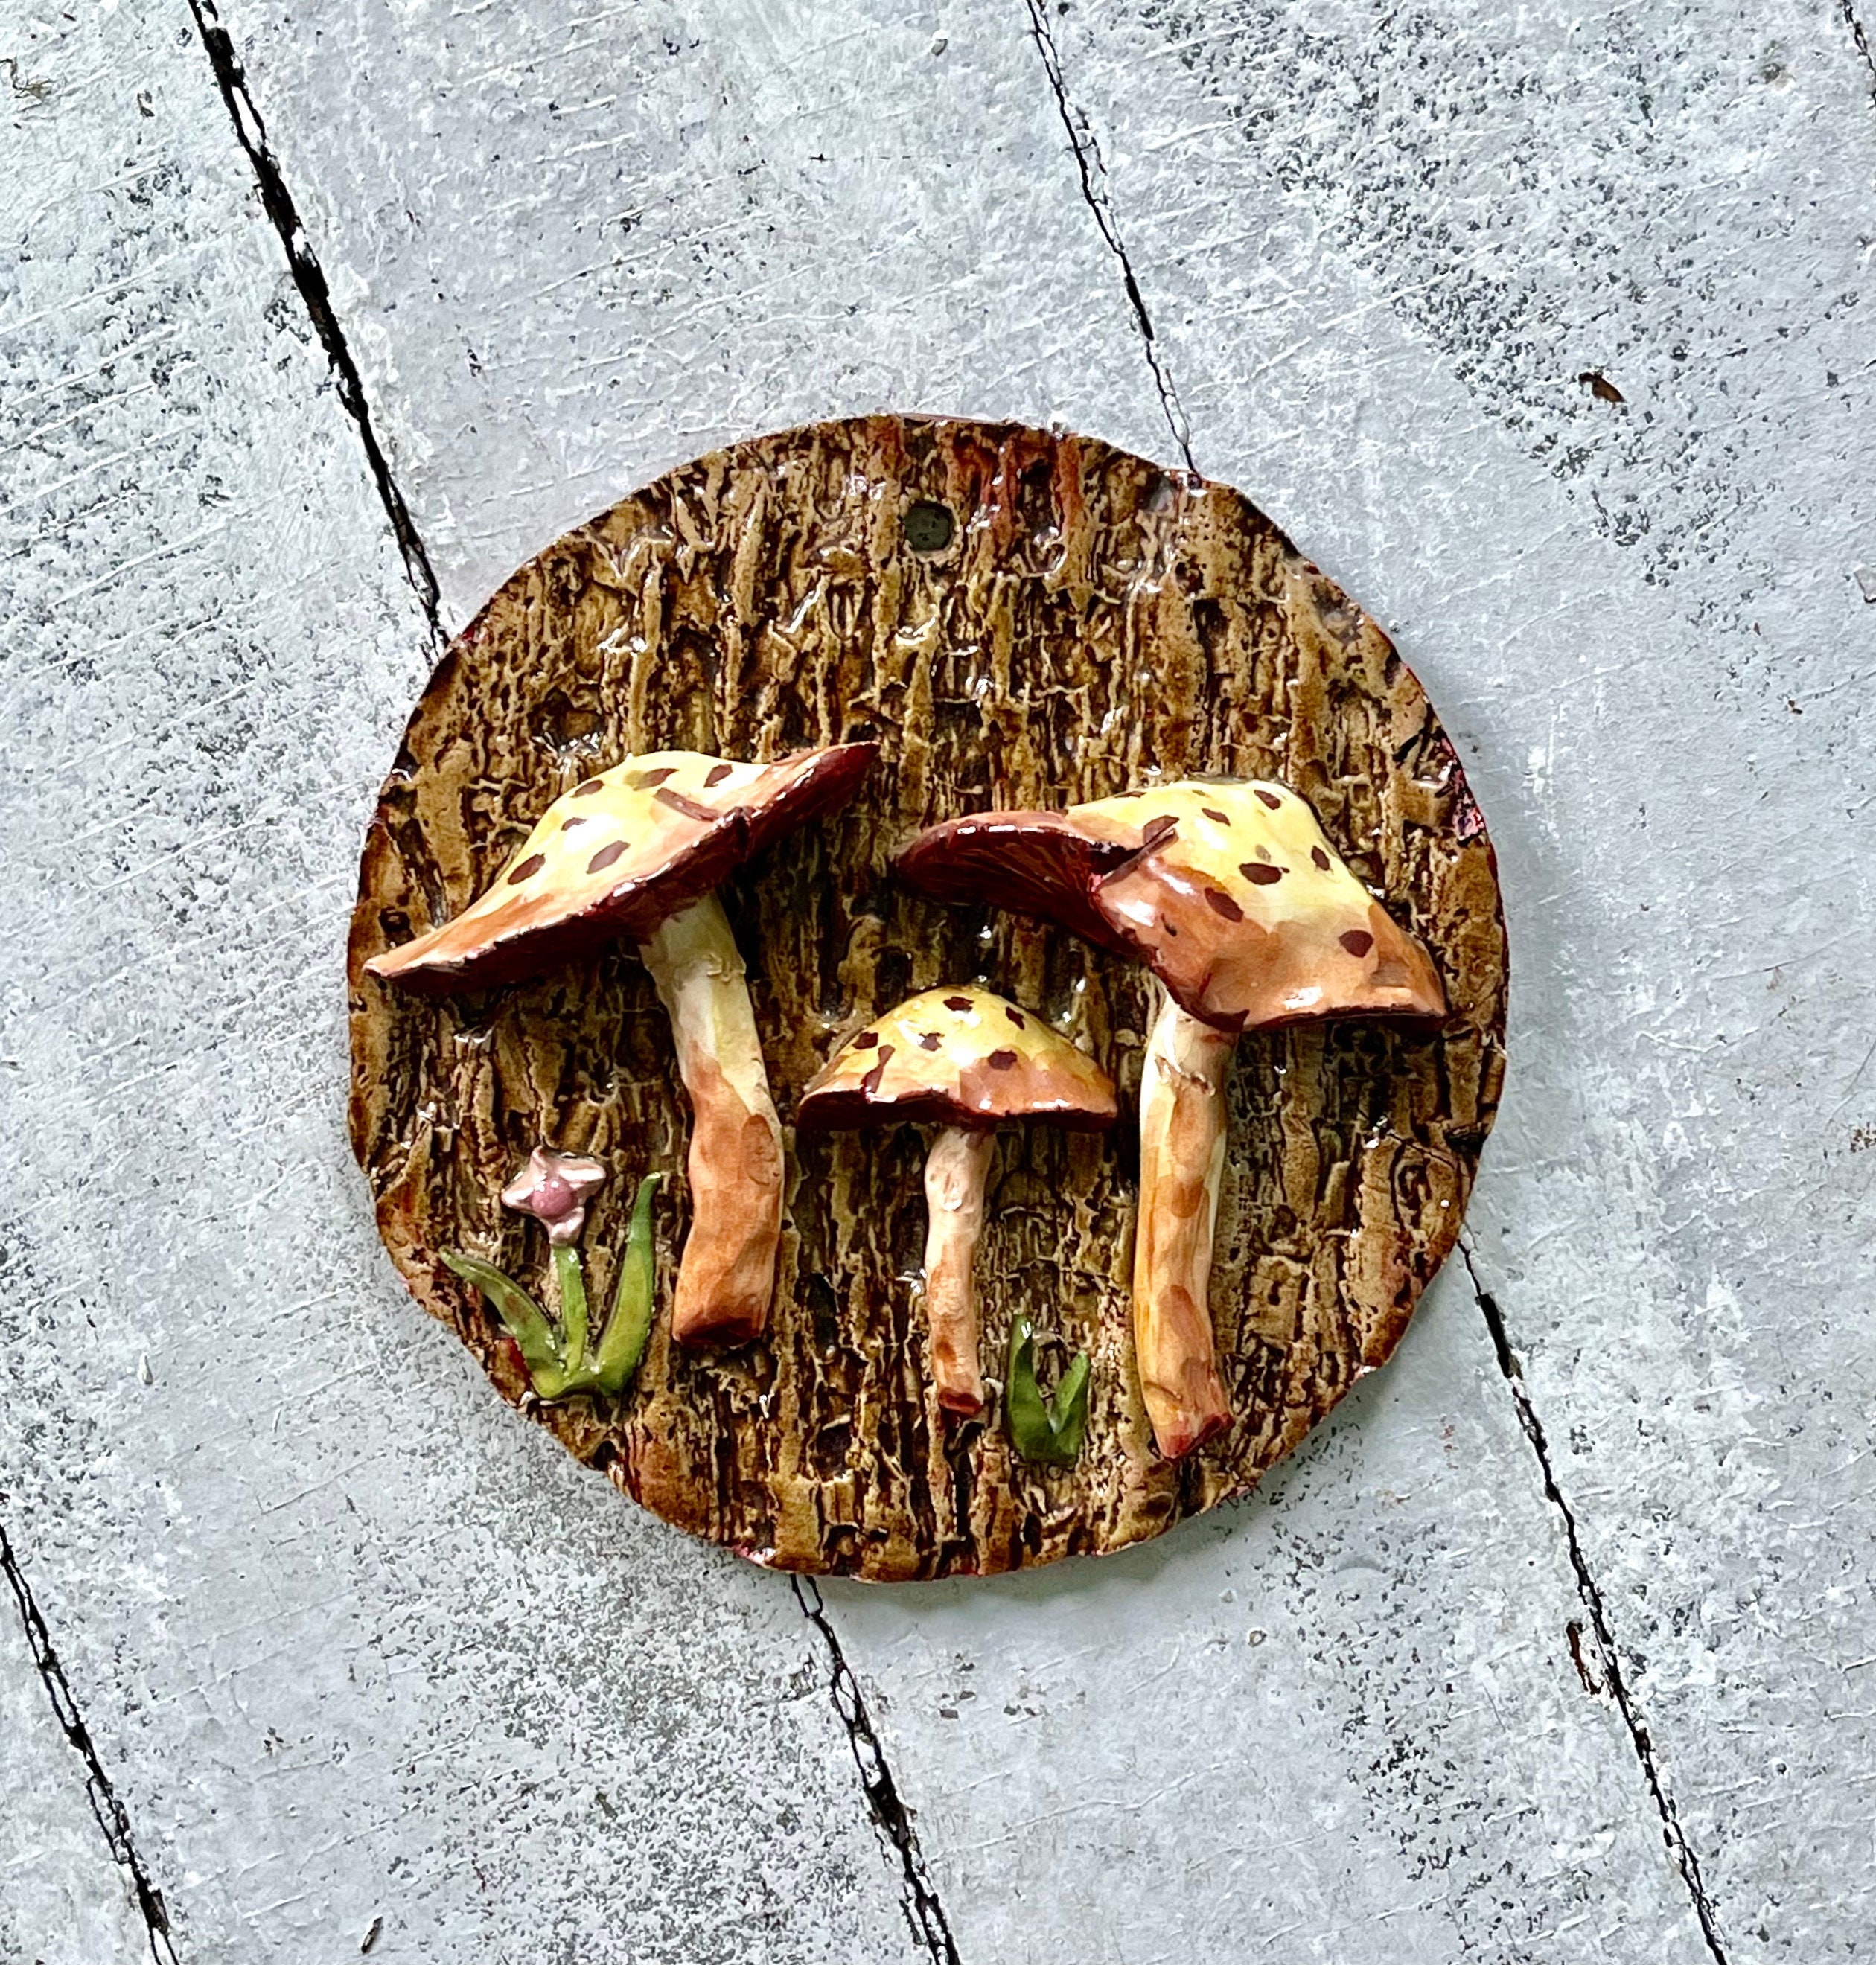 1970s Pair of Wooden Mushrooms